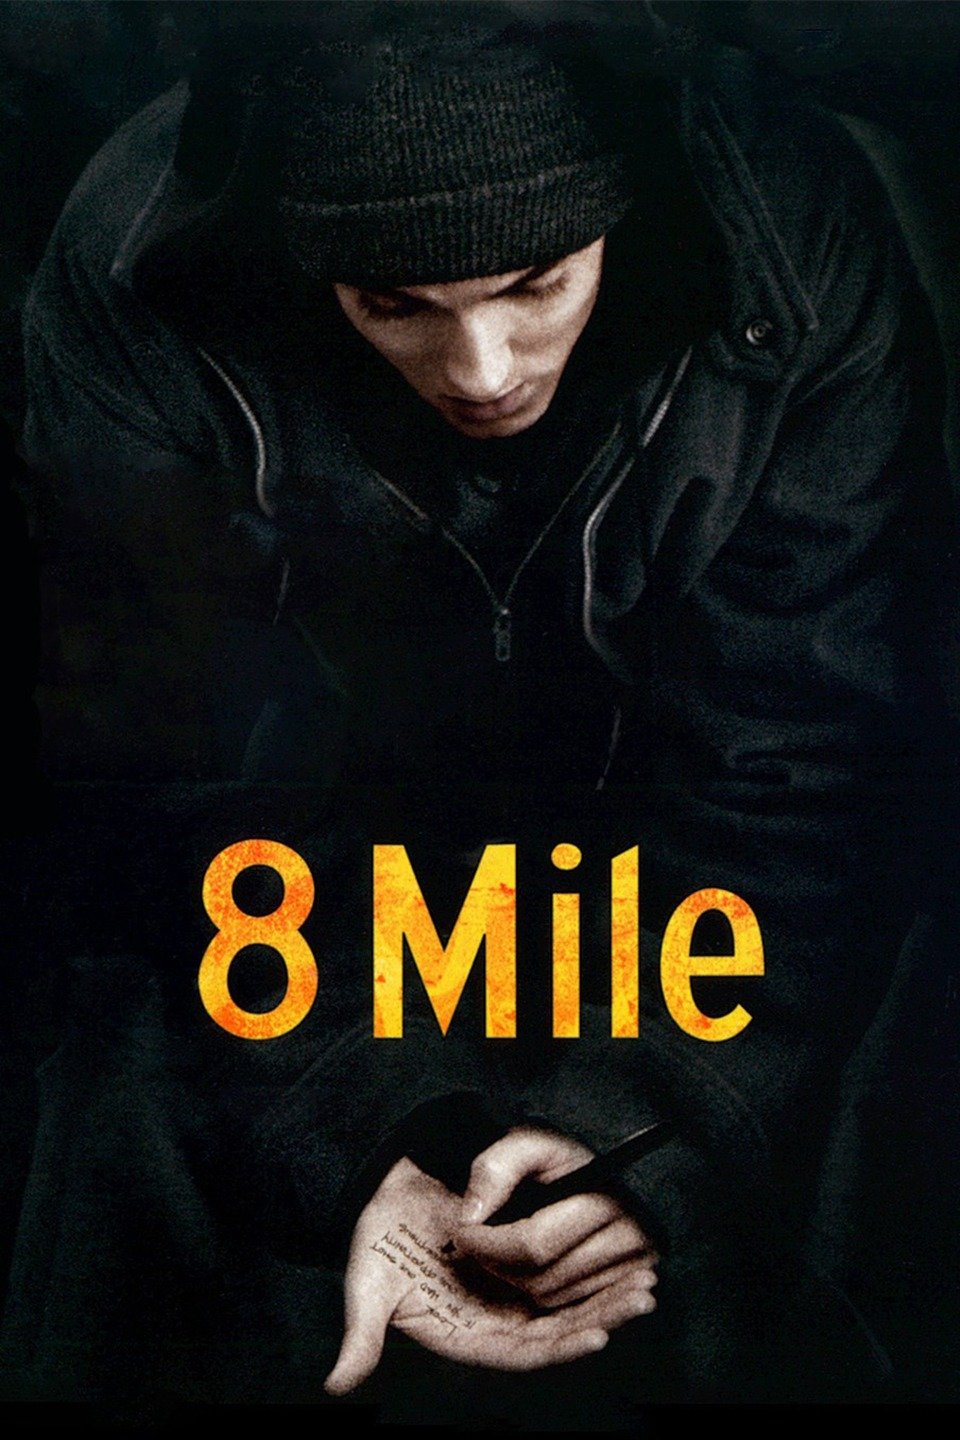 [MINI-HD] 8 Mile (2002) ดวลแร็บสนั่นโลก [1080p] [พากย์ไทย 5.1 + อังกฤษ DTS] [BDRip.x264.DTS] [บรรยายไทย + อังกฤษ] [เสียงไทย + ซับไทย] [ONE2UP]